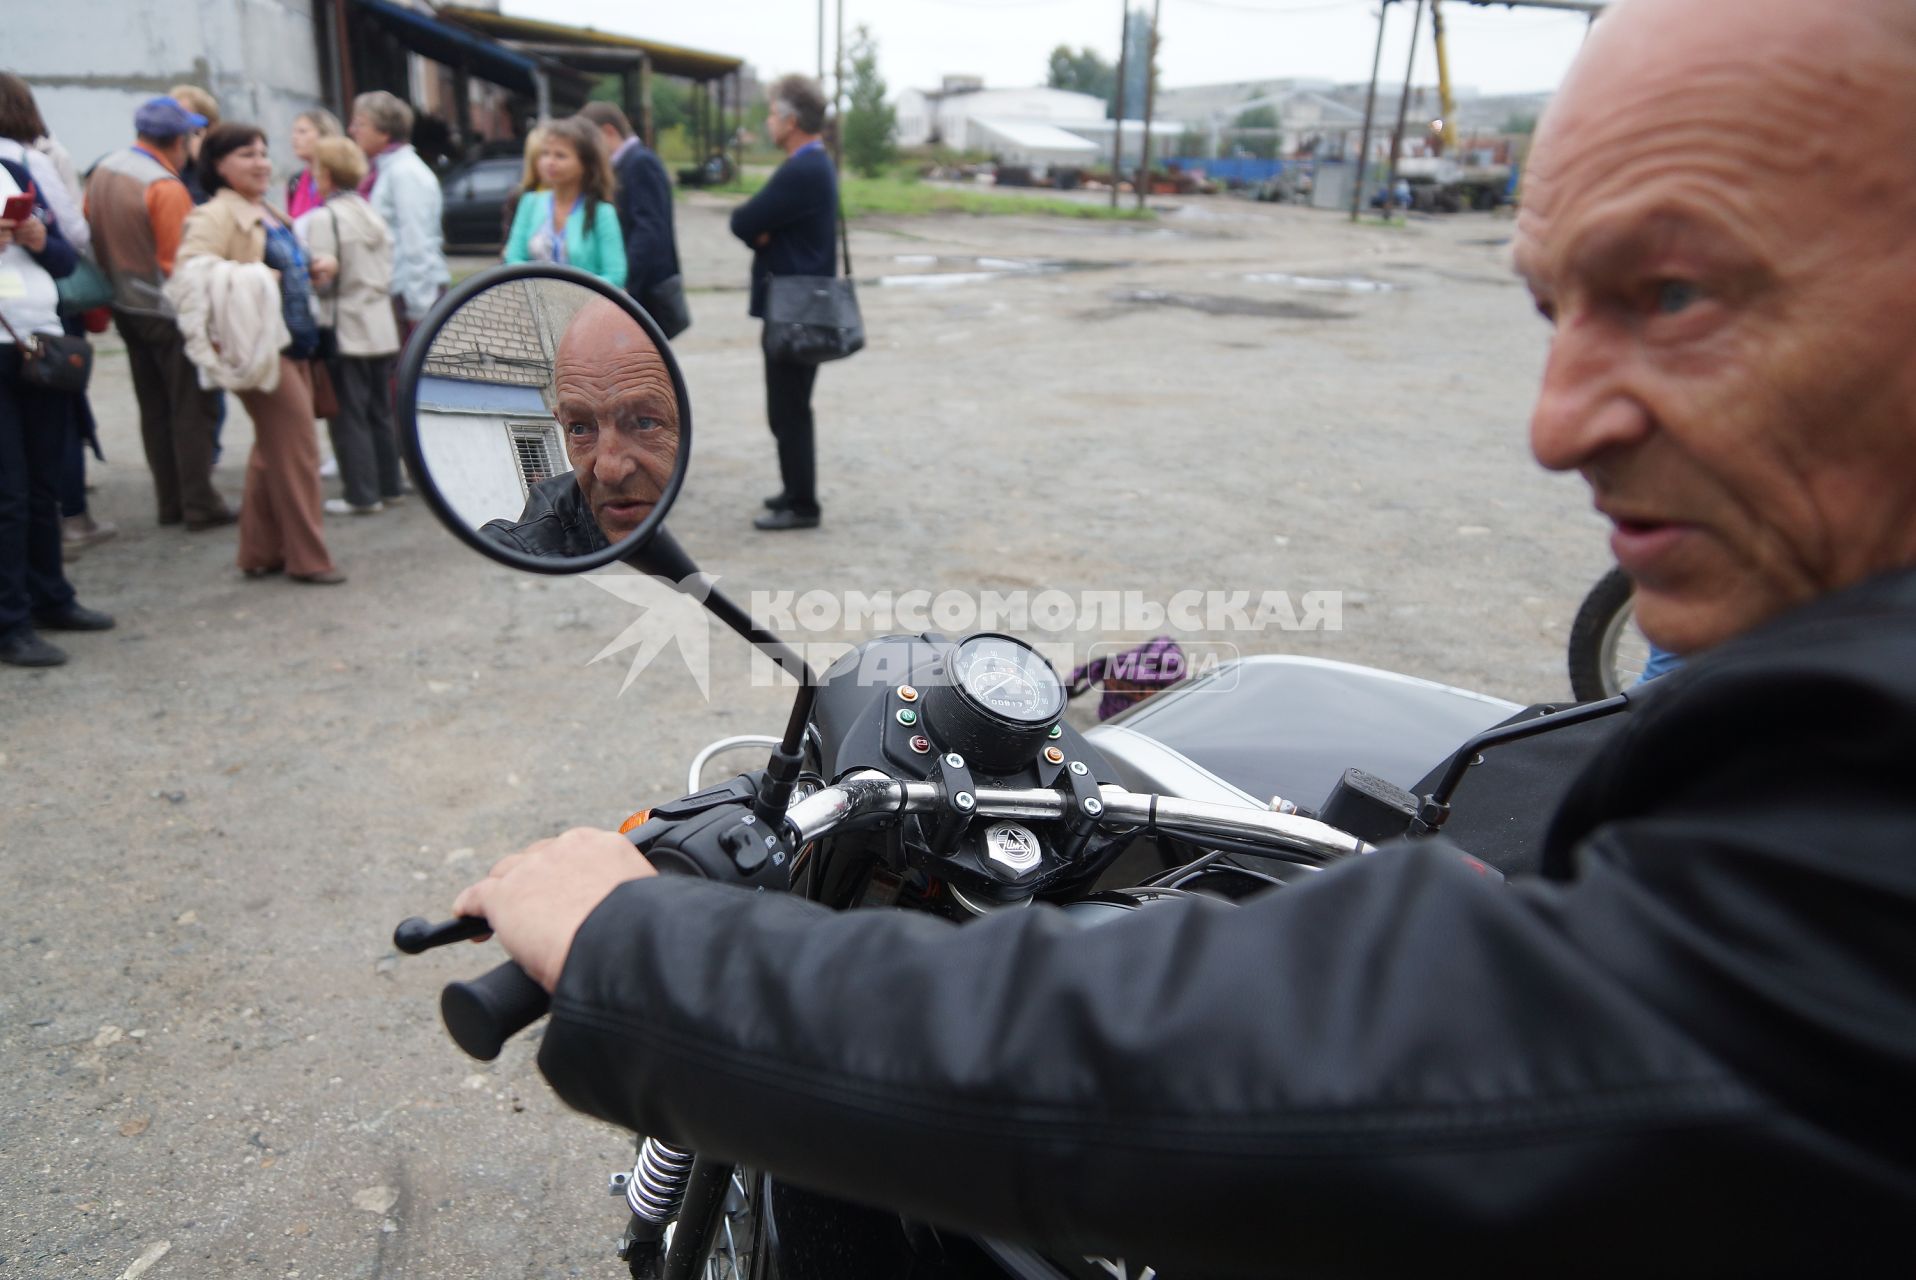 мужчина сидит за рулем мотоцикла \"Урал\" производства ирбитского мотоциклетного завода в городе Ирбит